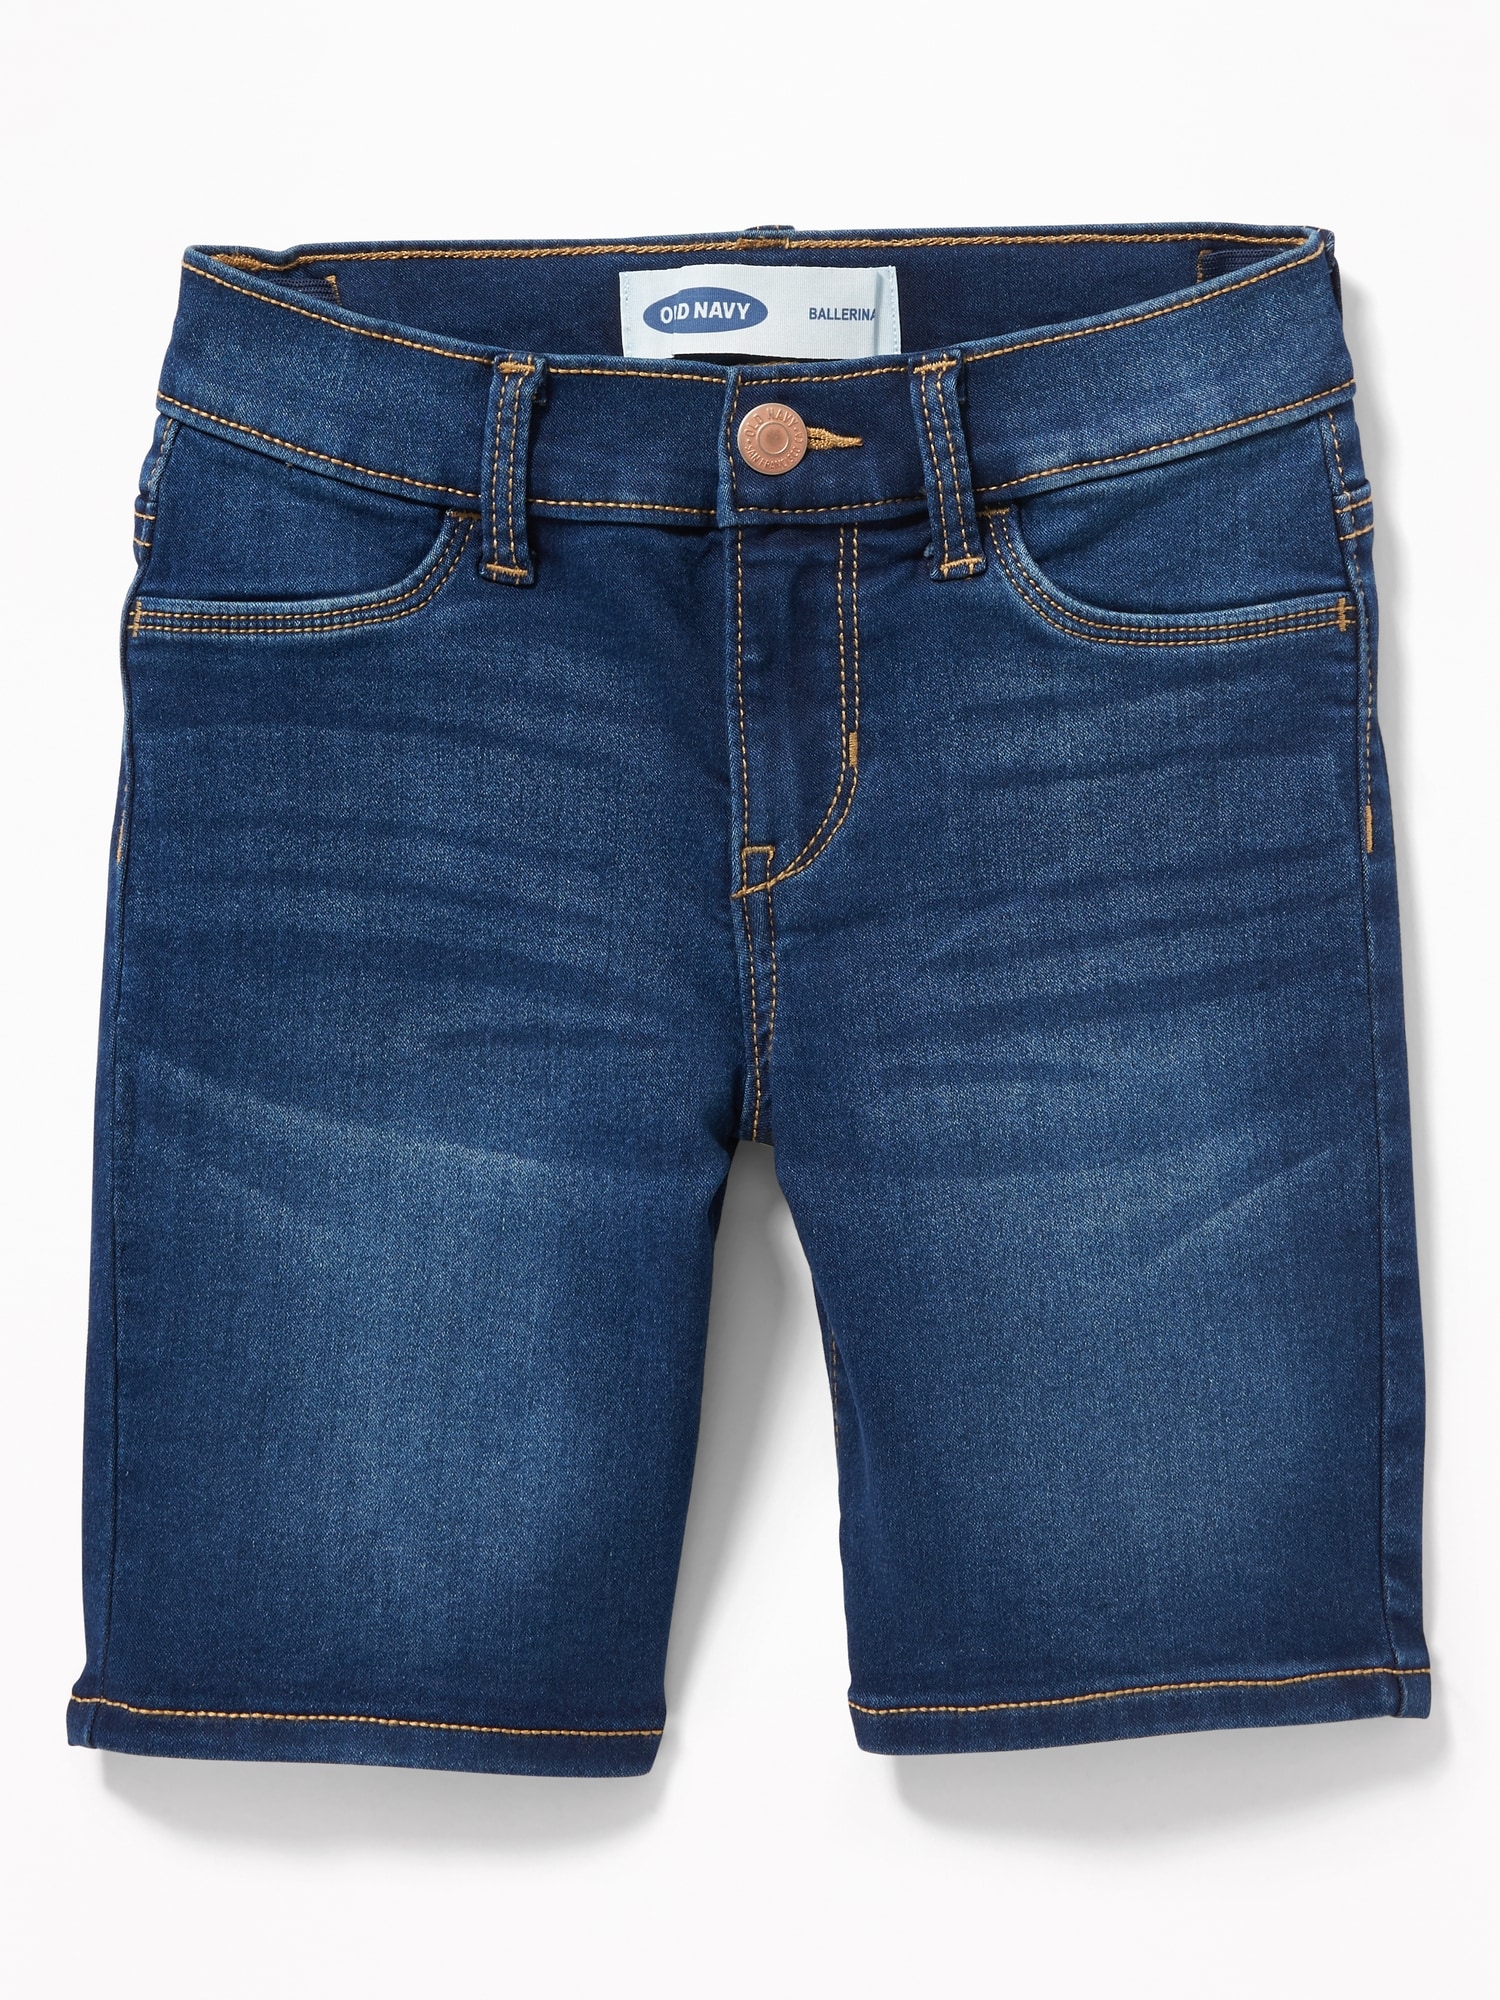 blue jean bermuda shorts